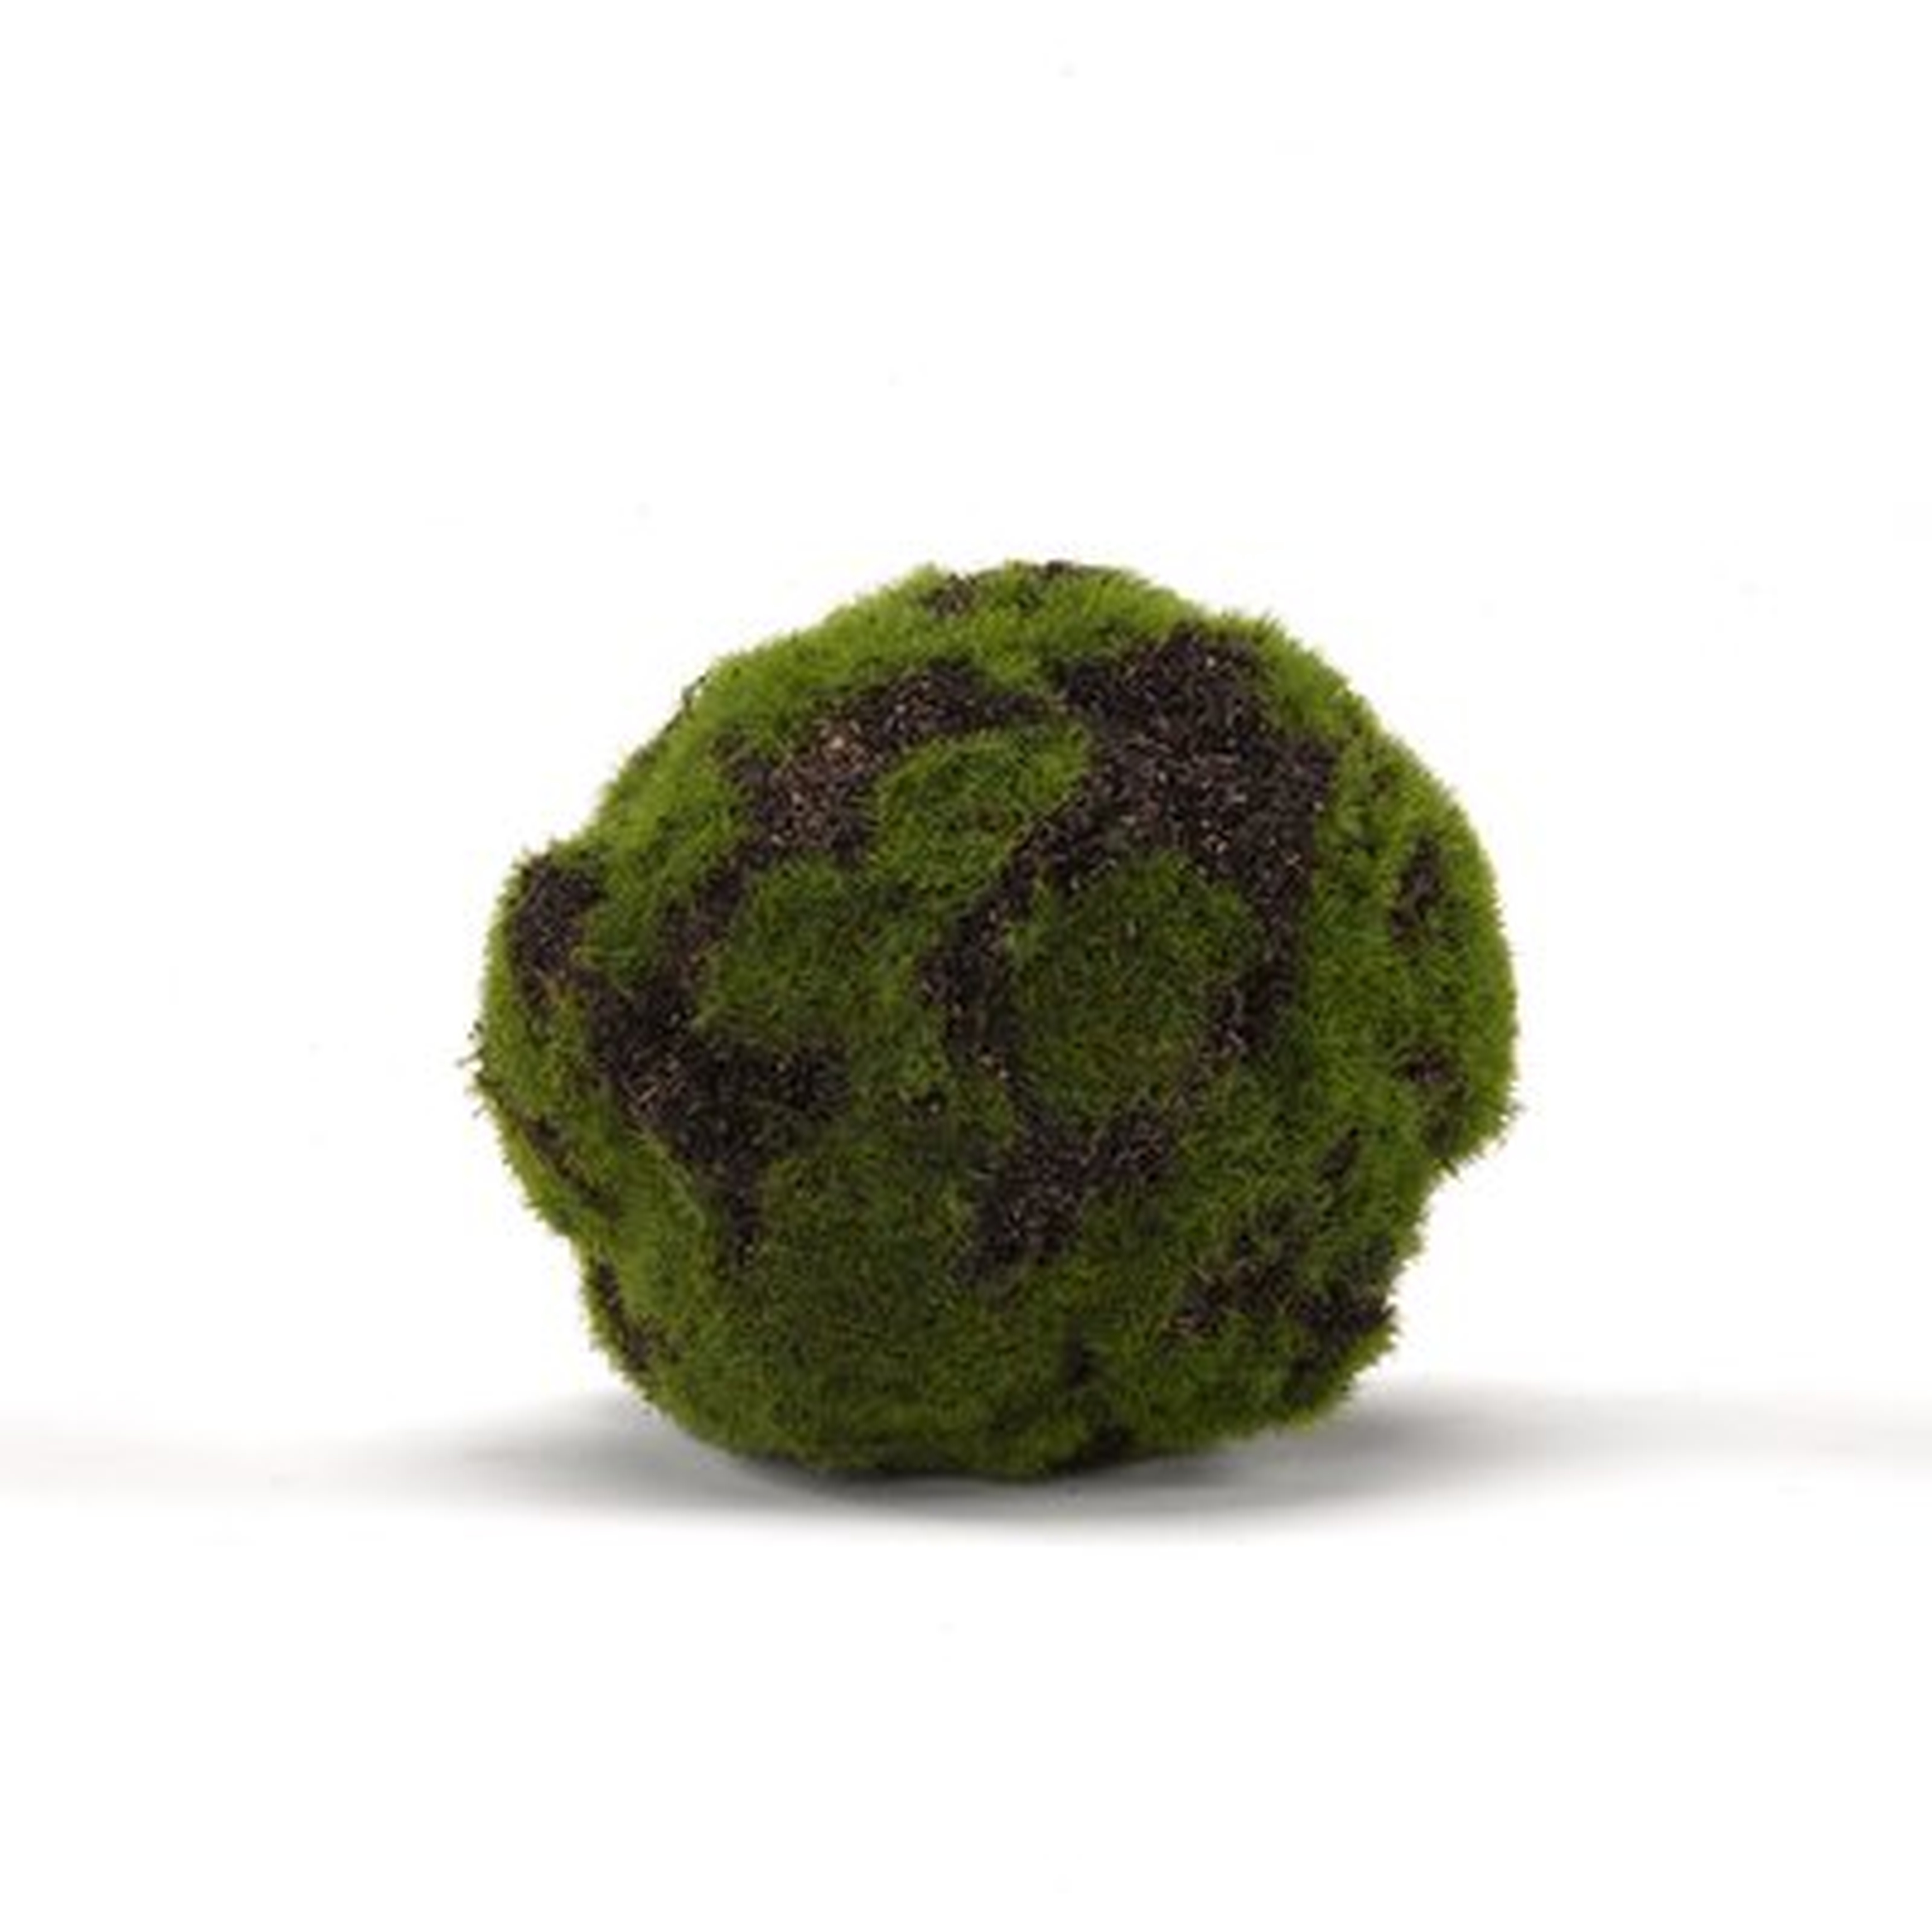 Crackled Moss Ball Plant - Wayfair